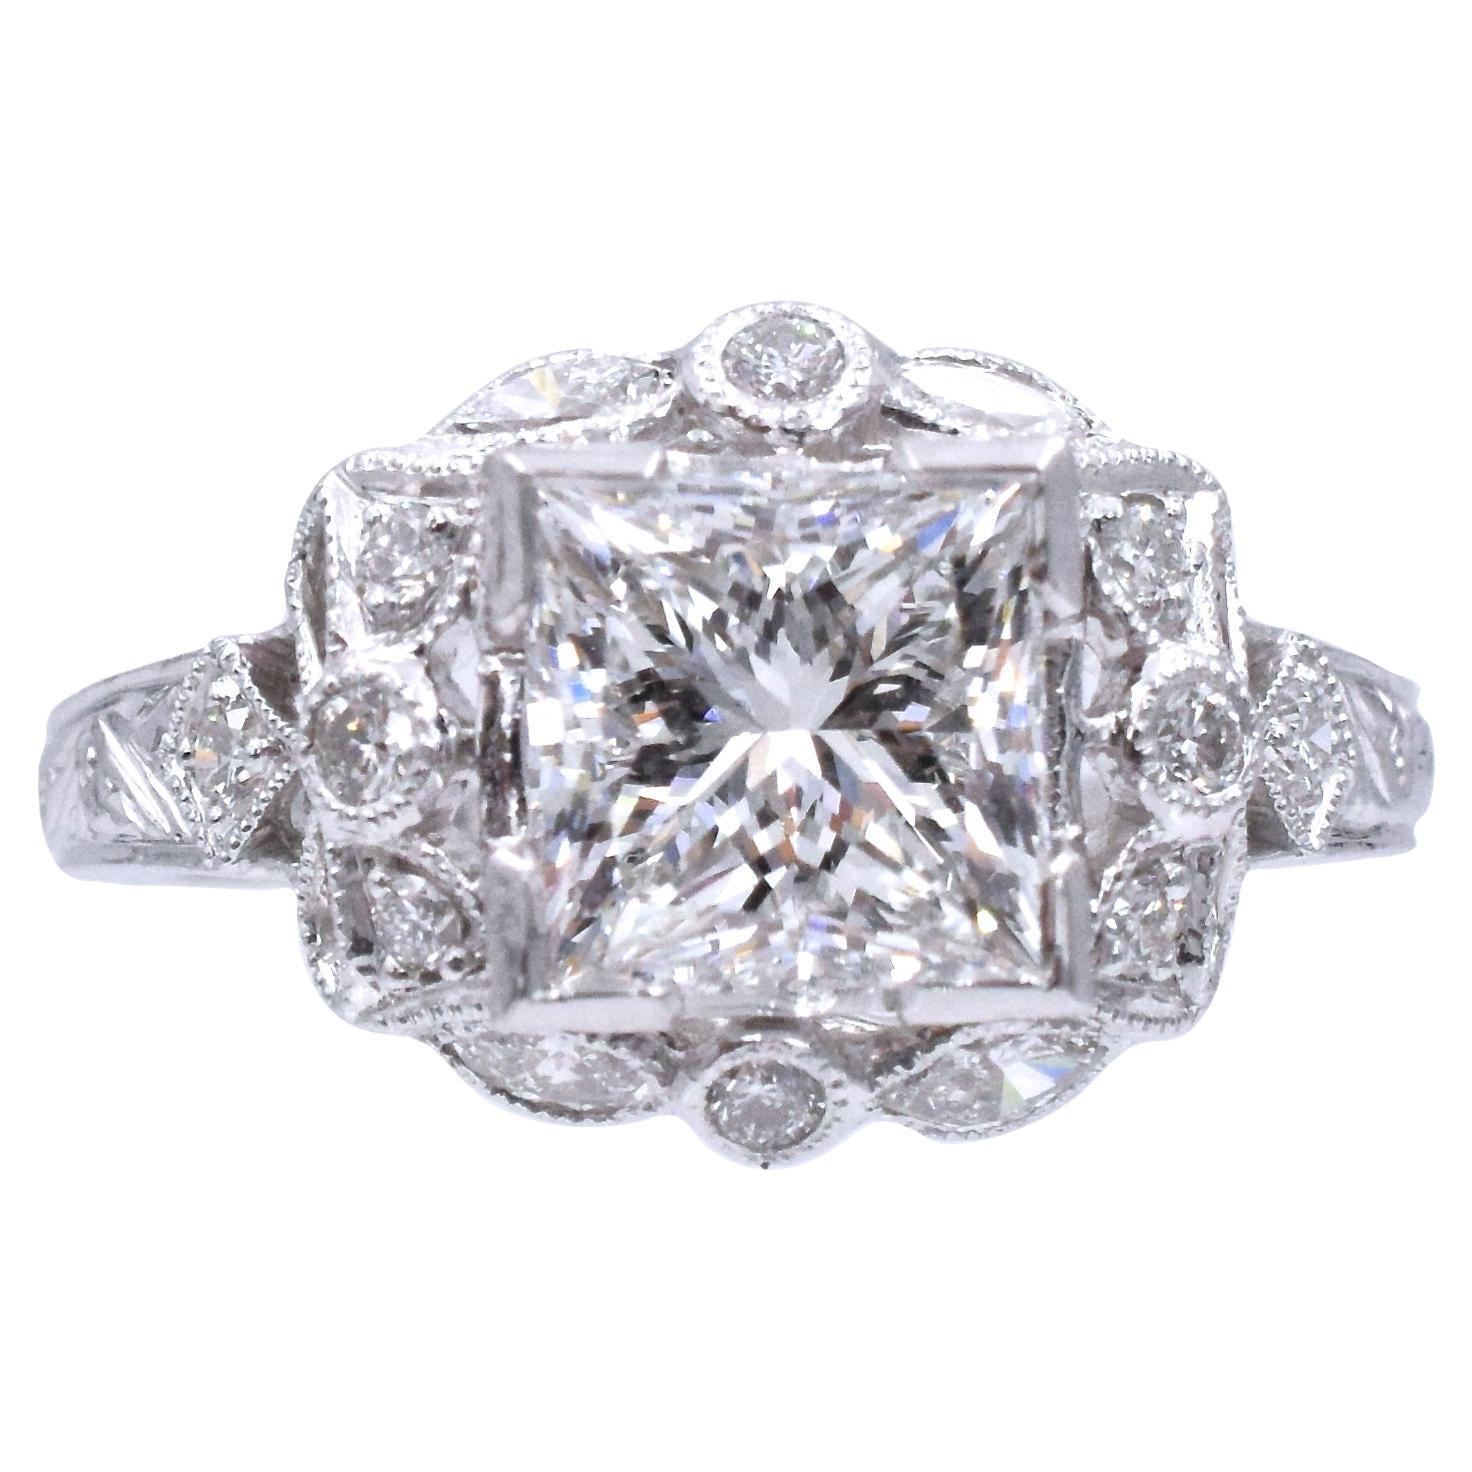 NALLY   G.I.A. Certified Princess Cut Diamond  Ring.  For Sale